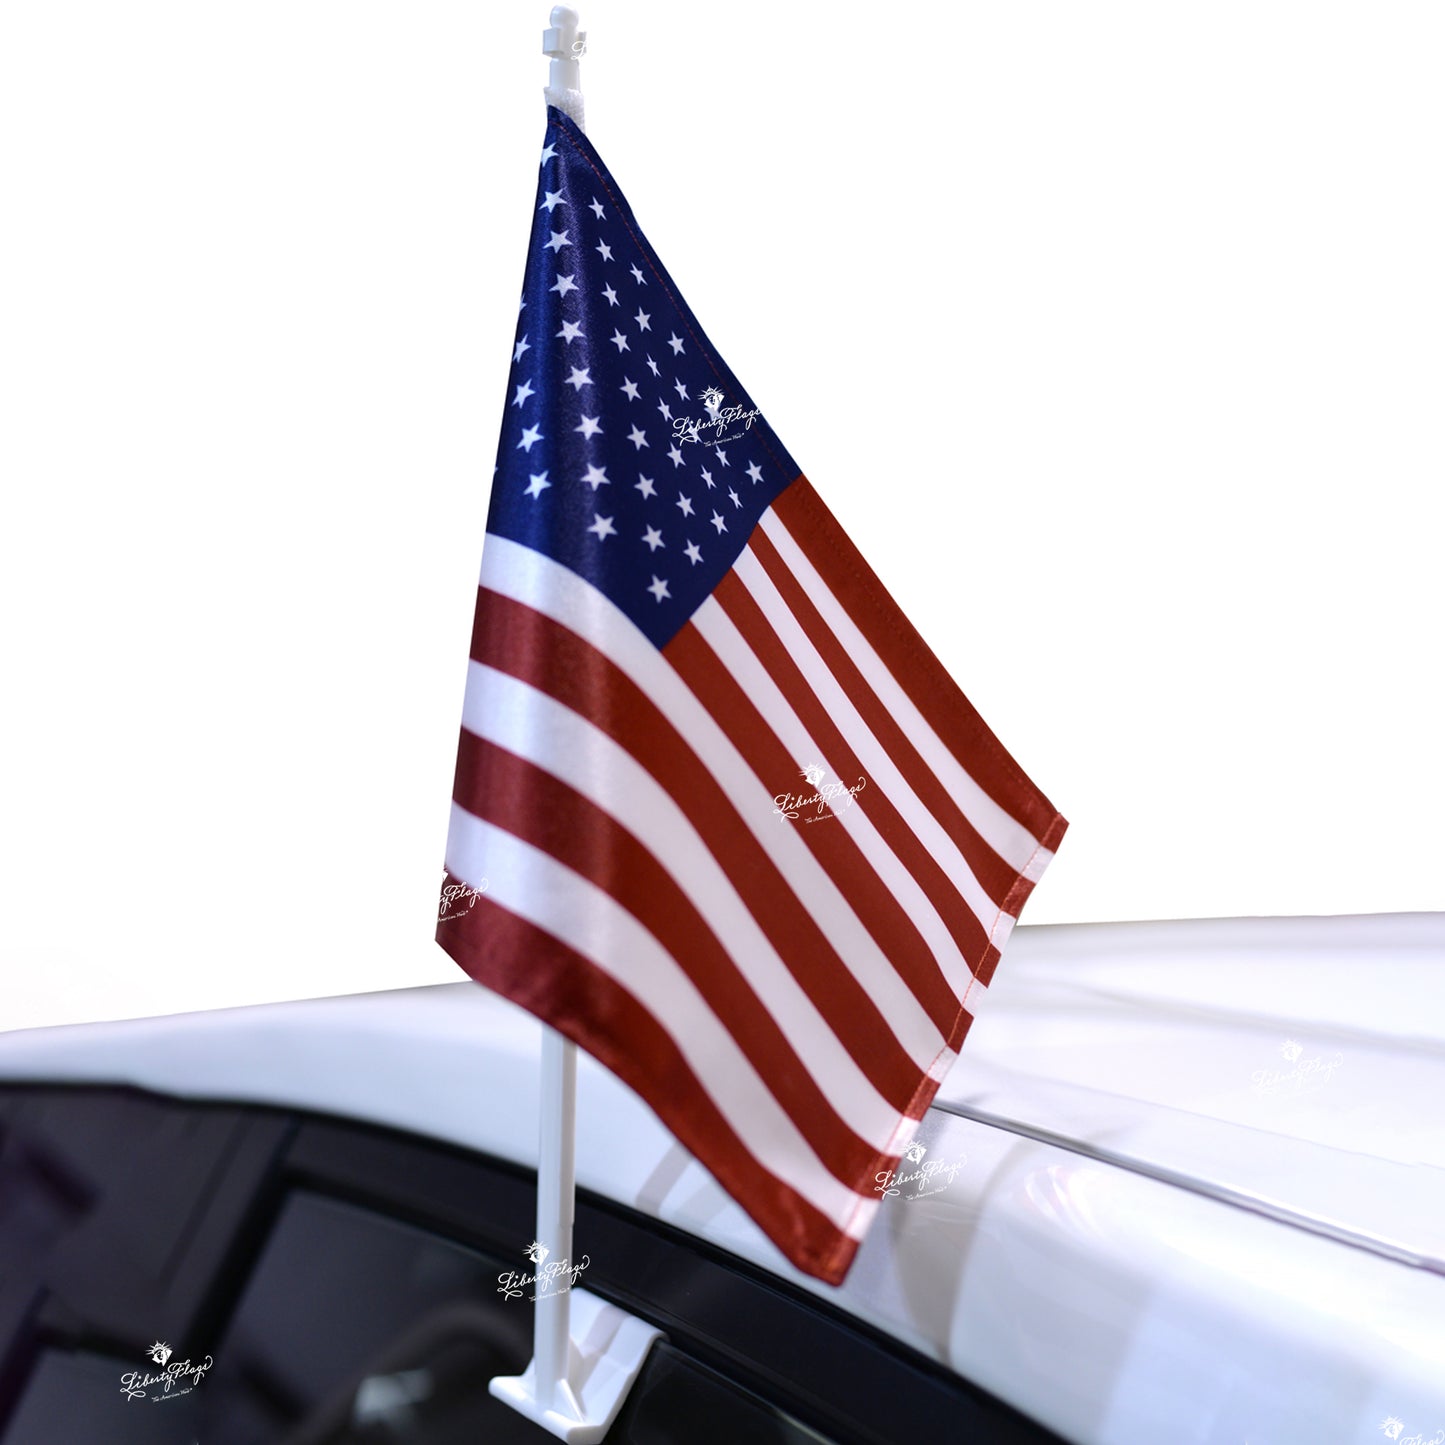 U.S. Car Window Flag